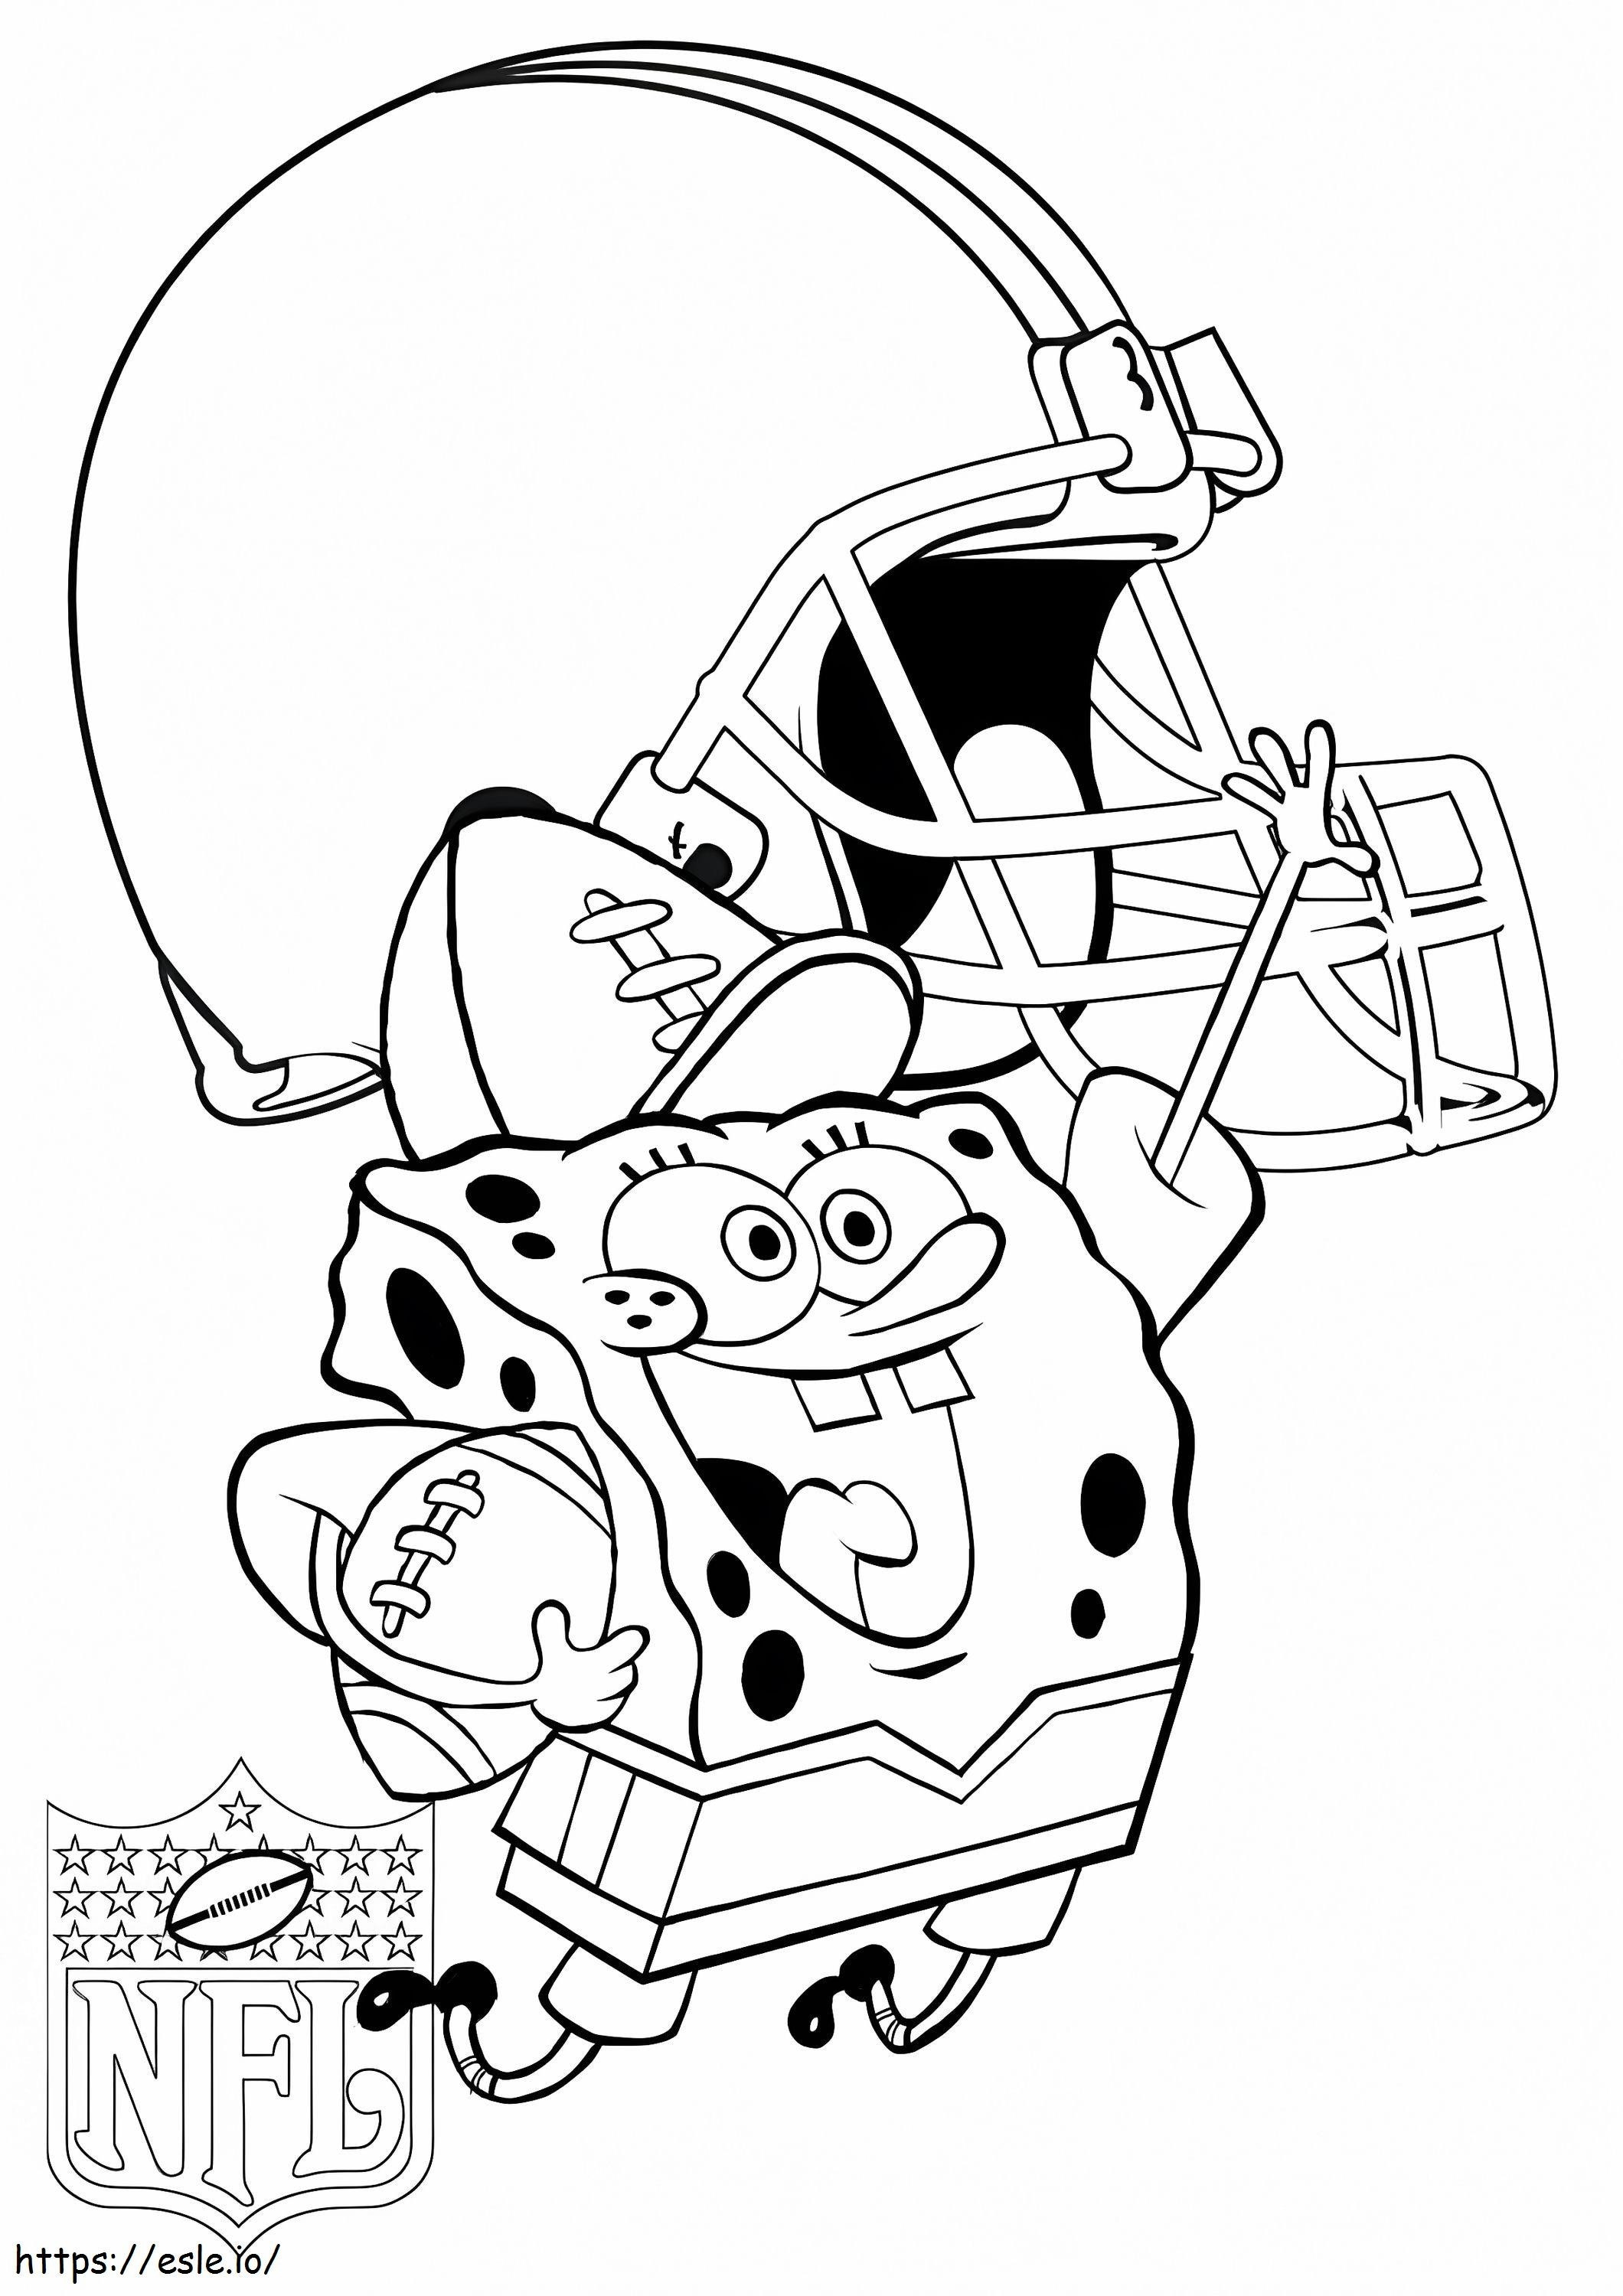 Spongebob Squarepants Cleveland Browns With Baseball Cap coloring page